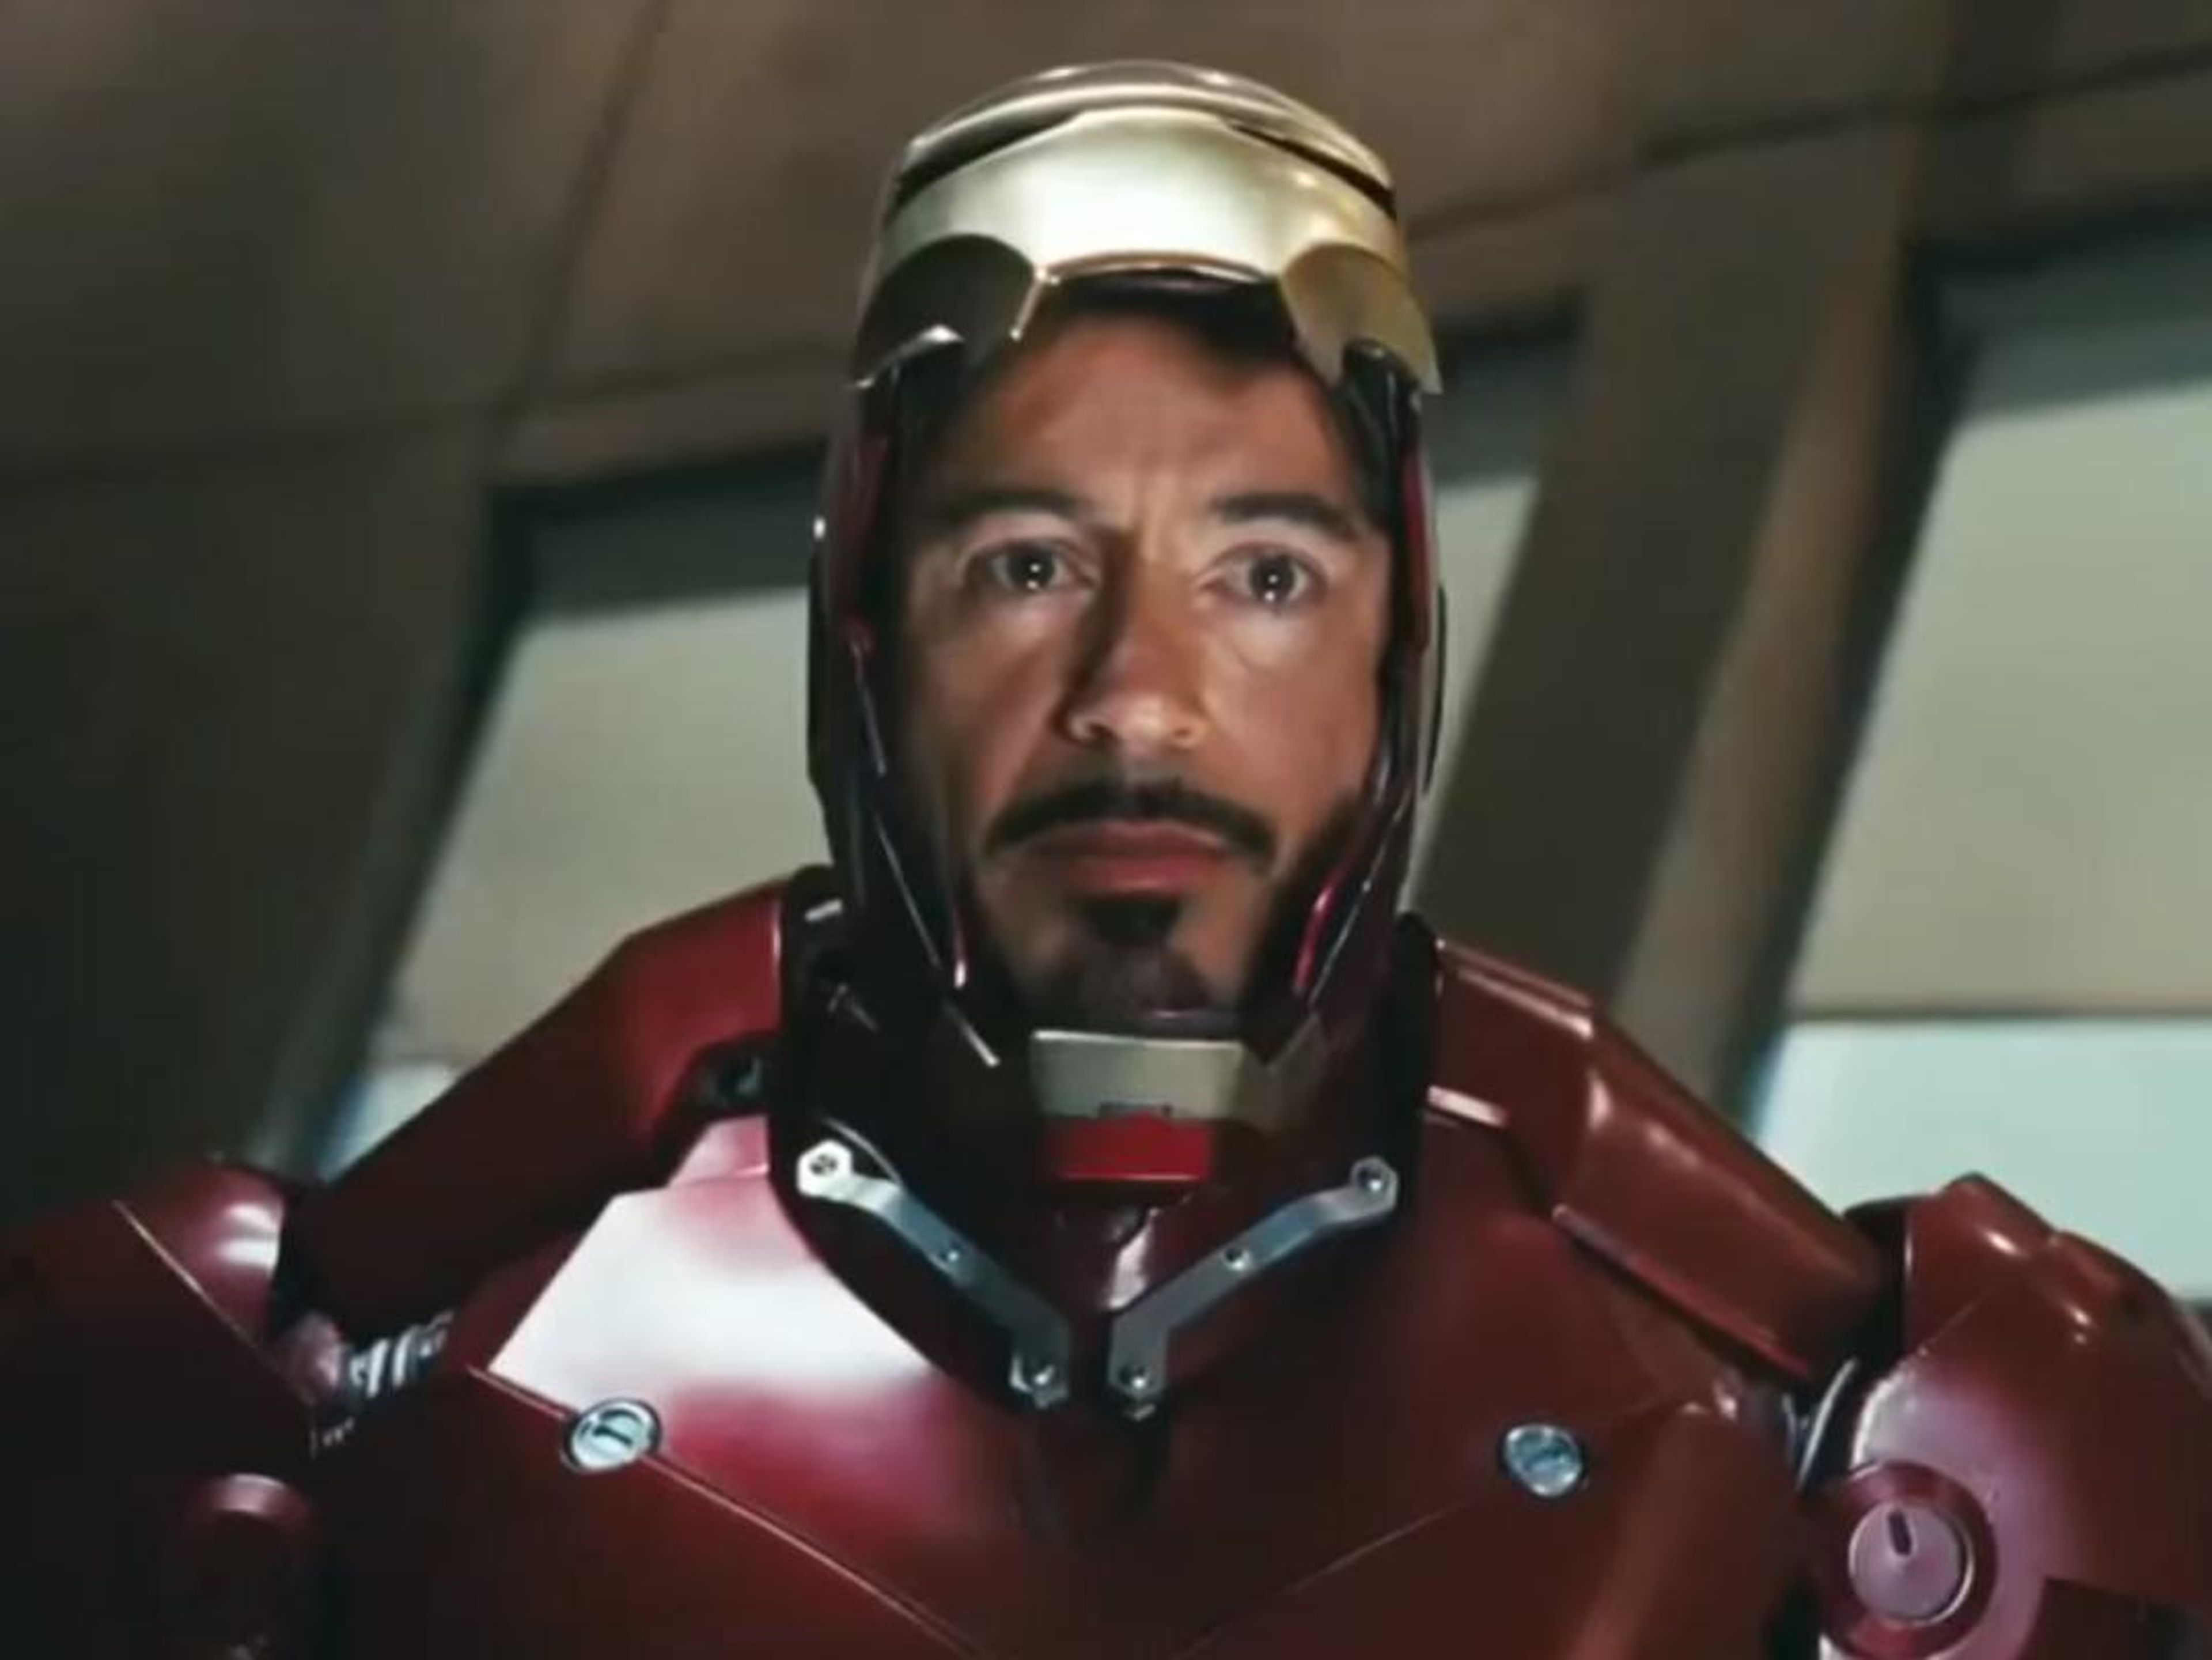 5. Robert Downey Jr. as Tony Stark/Iron Man in "Iron Man" (2008)